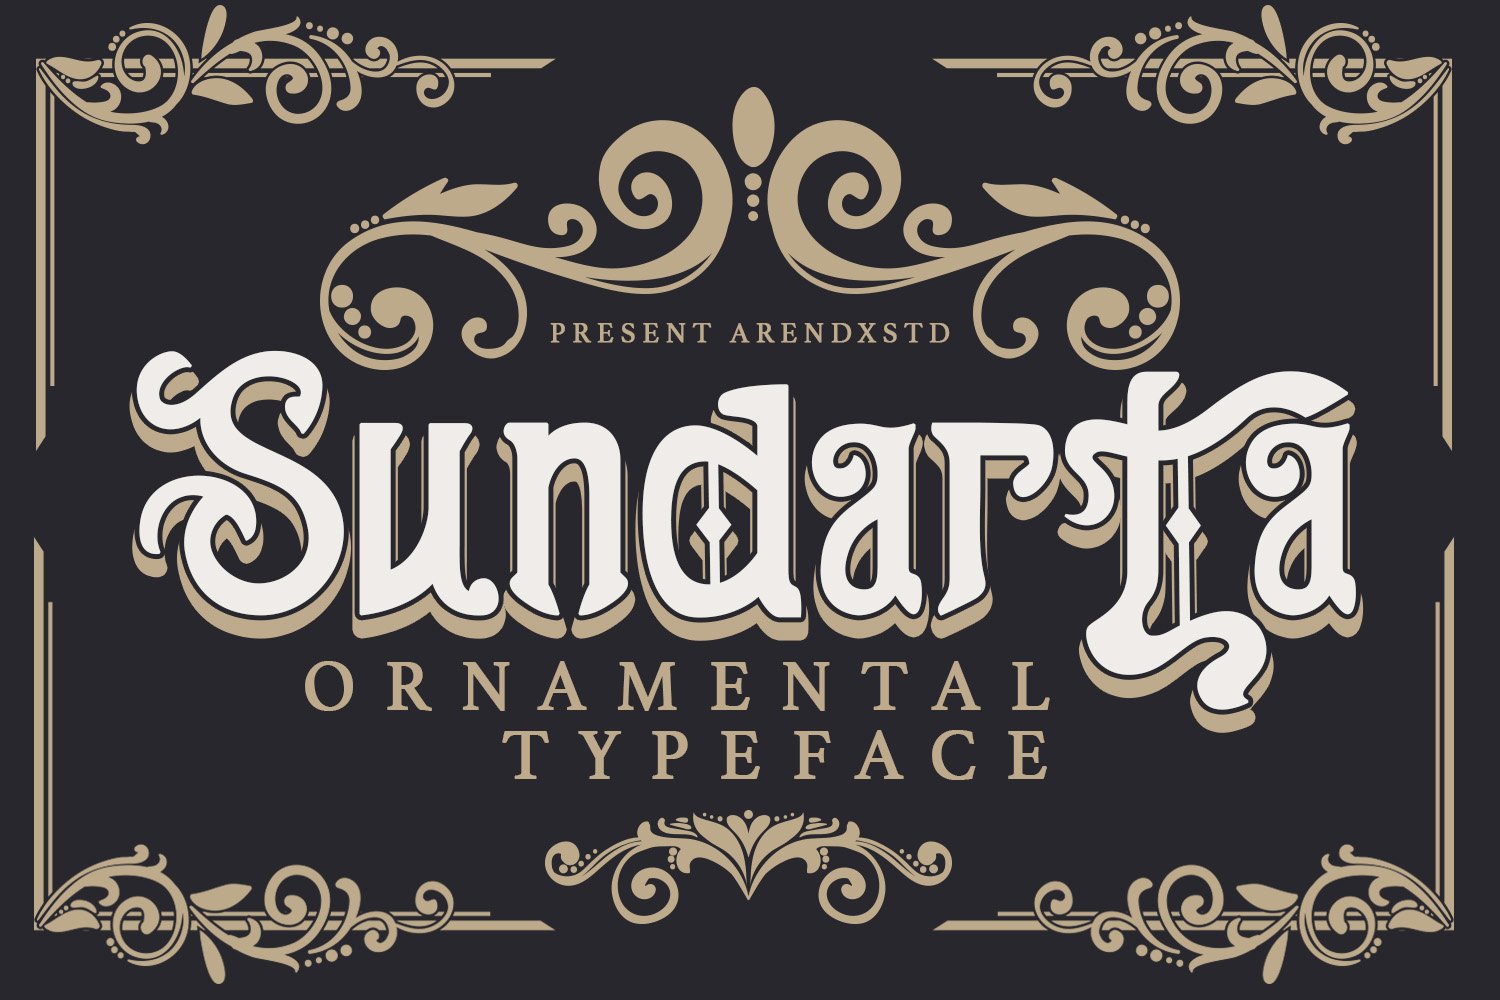 Sundarta - Vintage Typeface cover image.